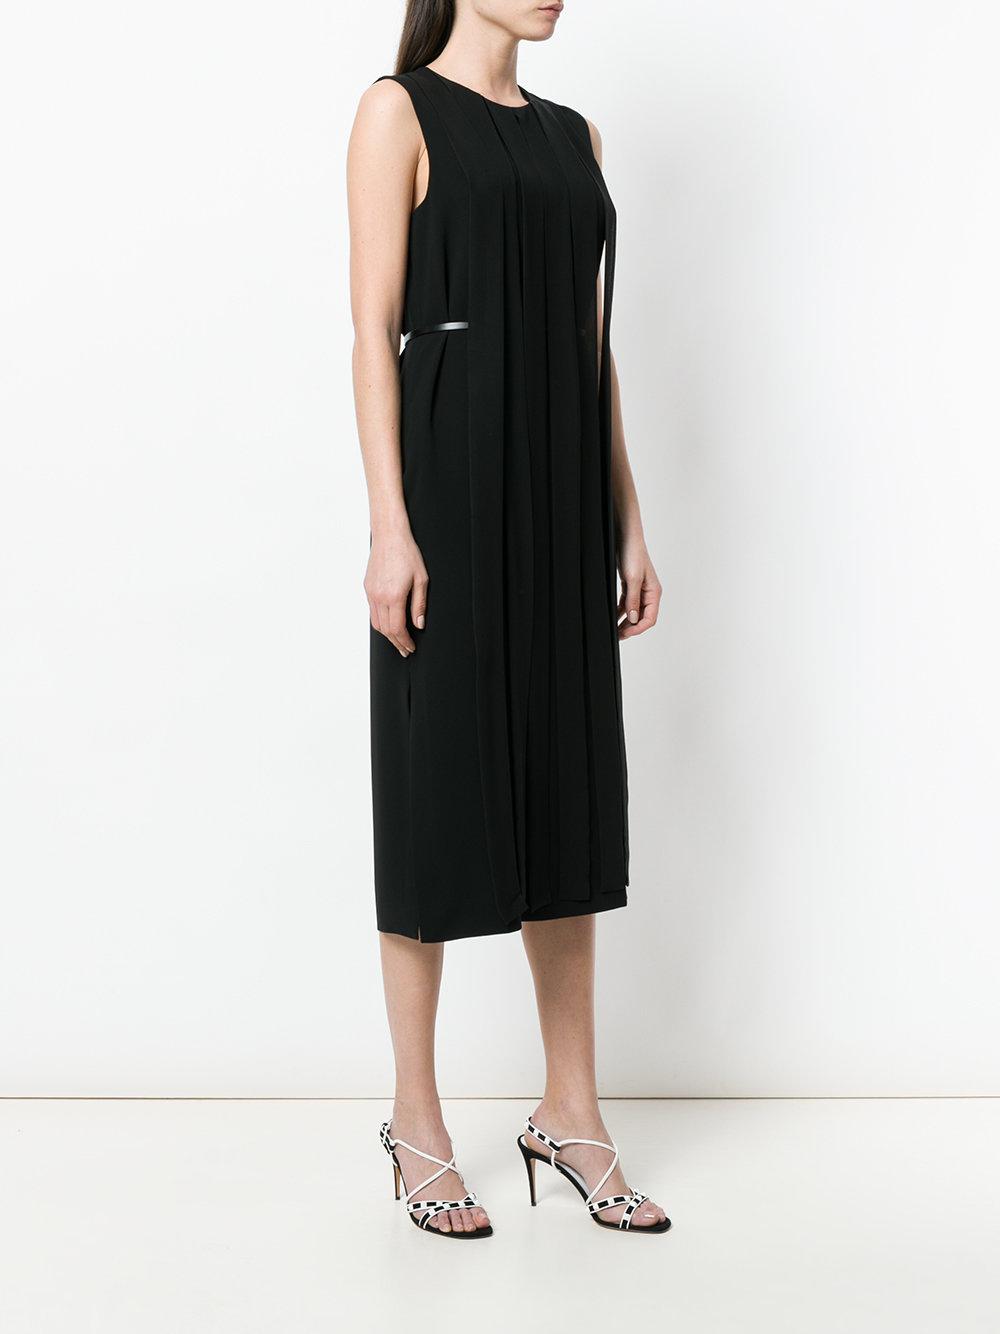 Max Mara Silk Udine Georgette Dress in Black - Lyst